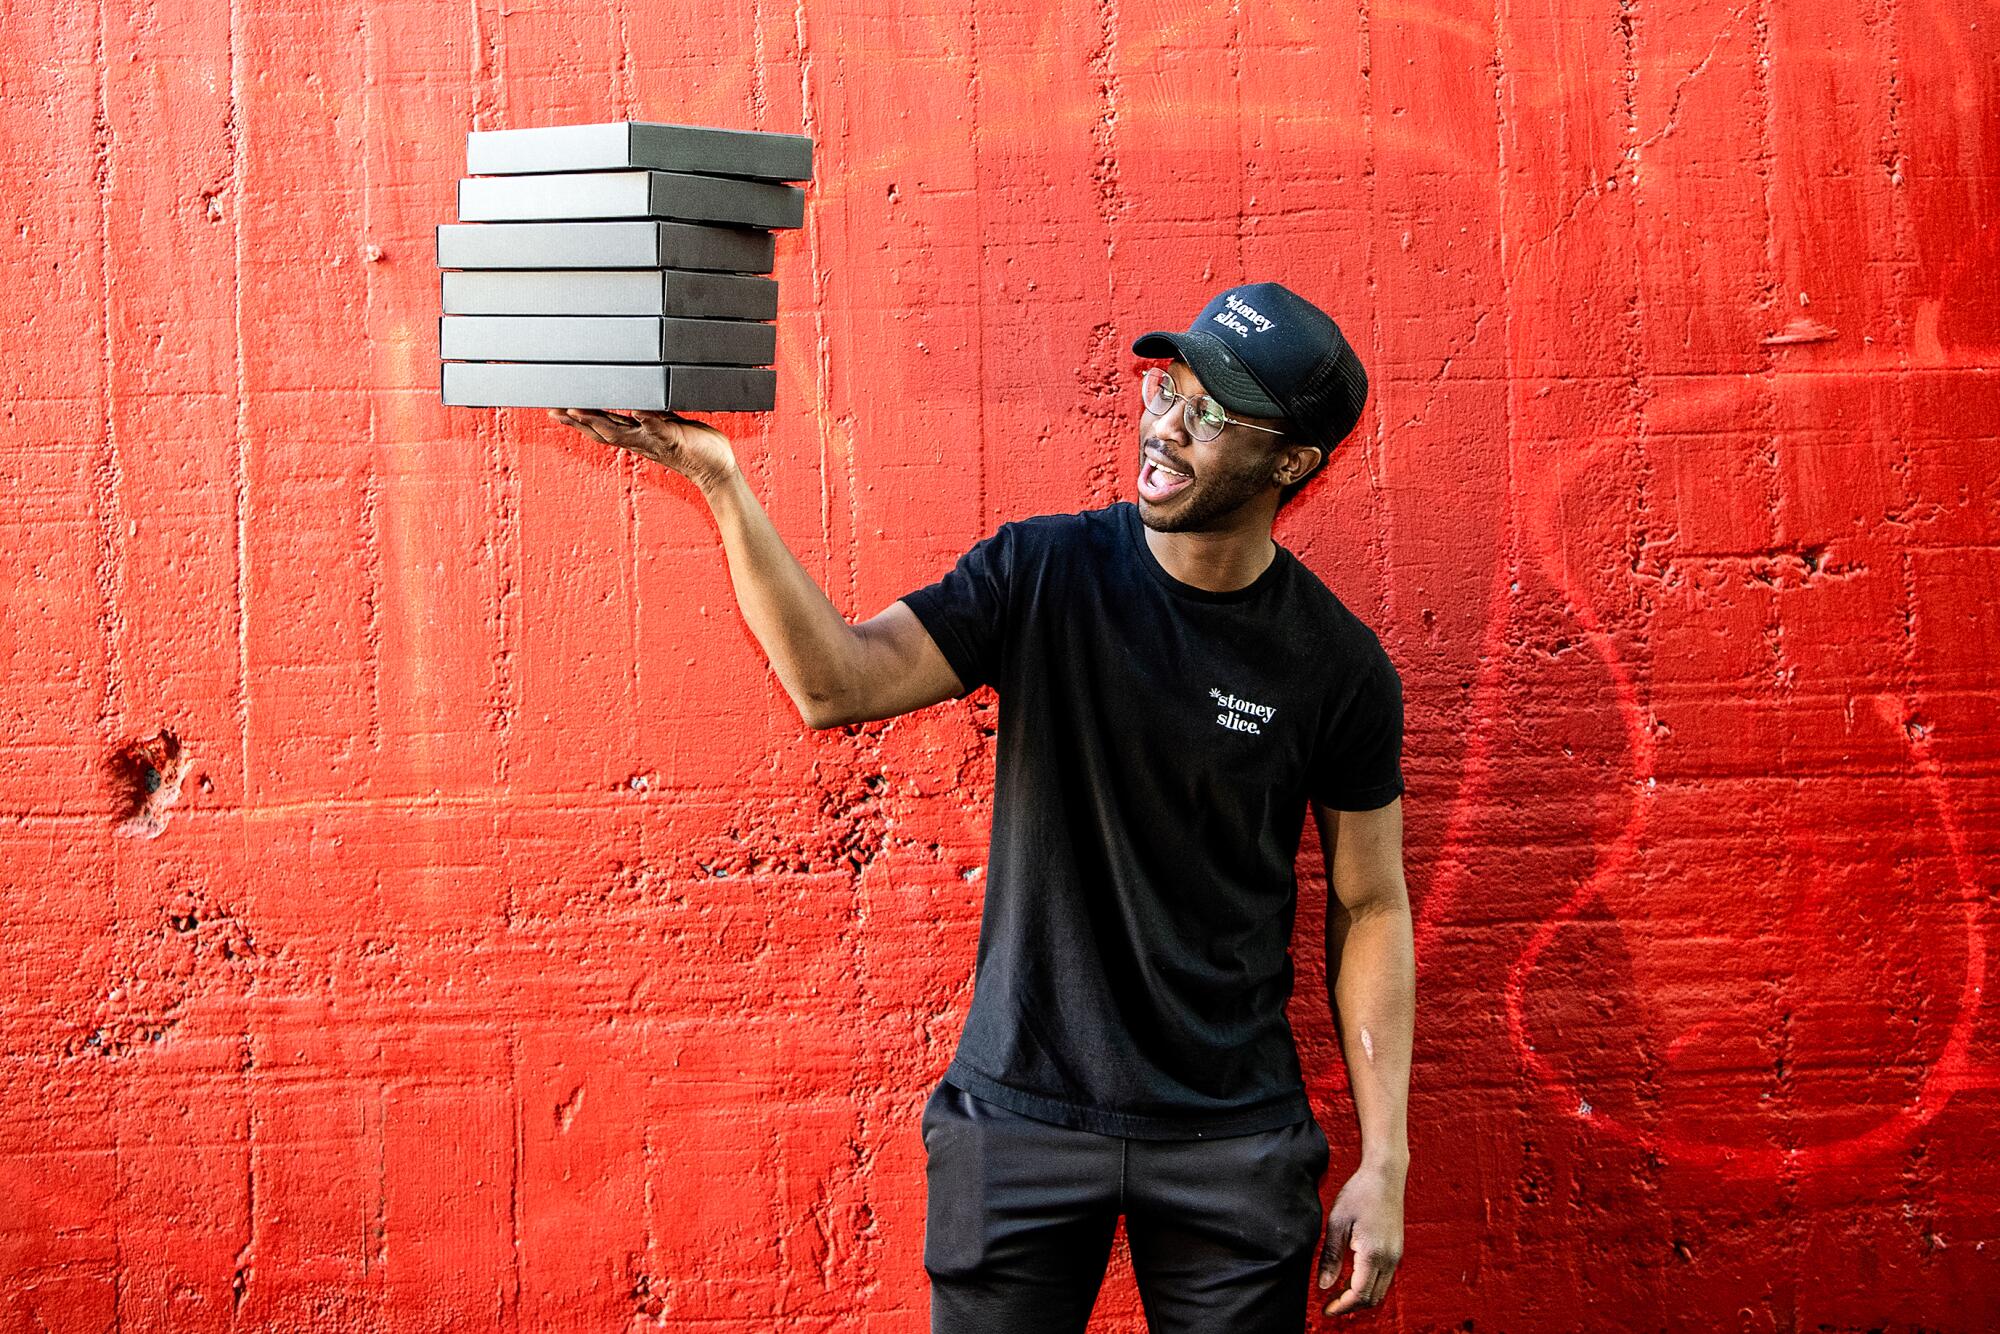 Kashka Hopkinson, owner of Stoney Slice, holding his custom black pizza boxes